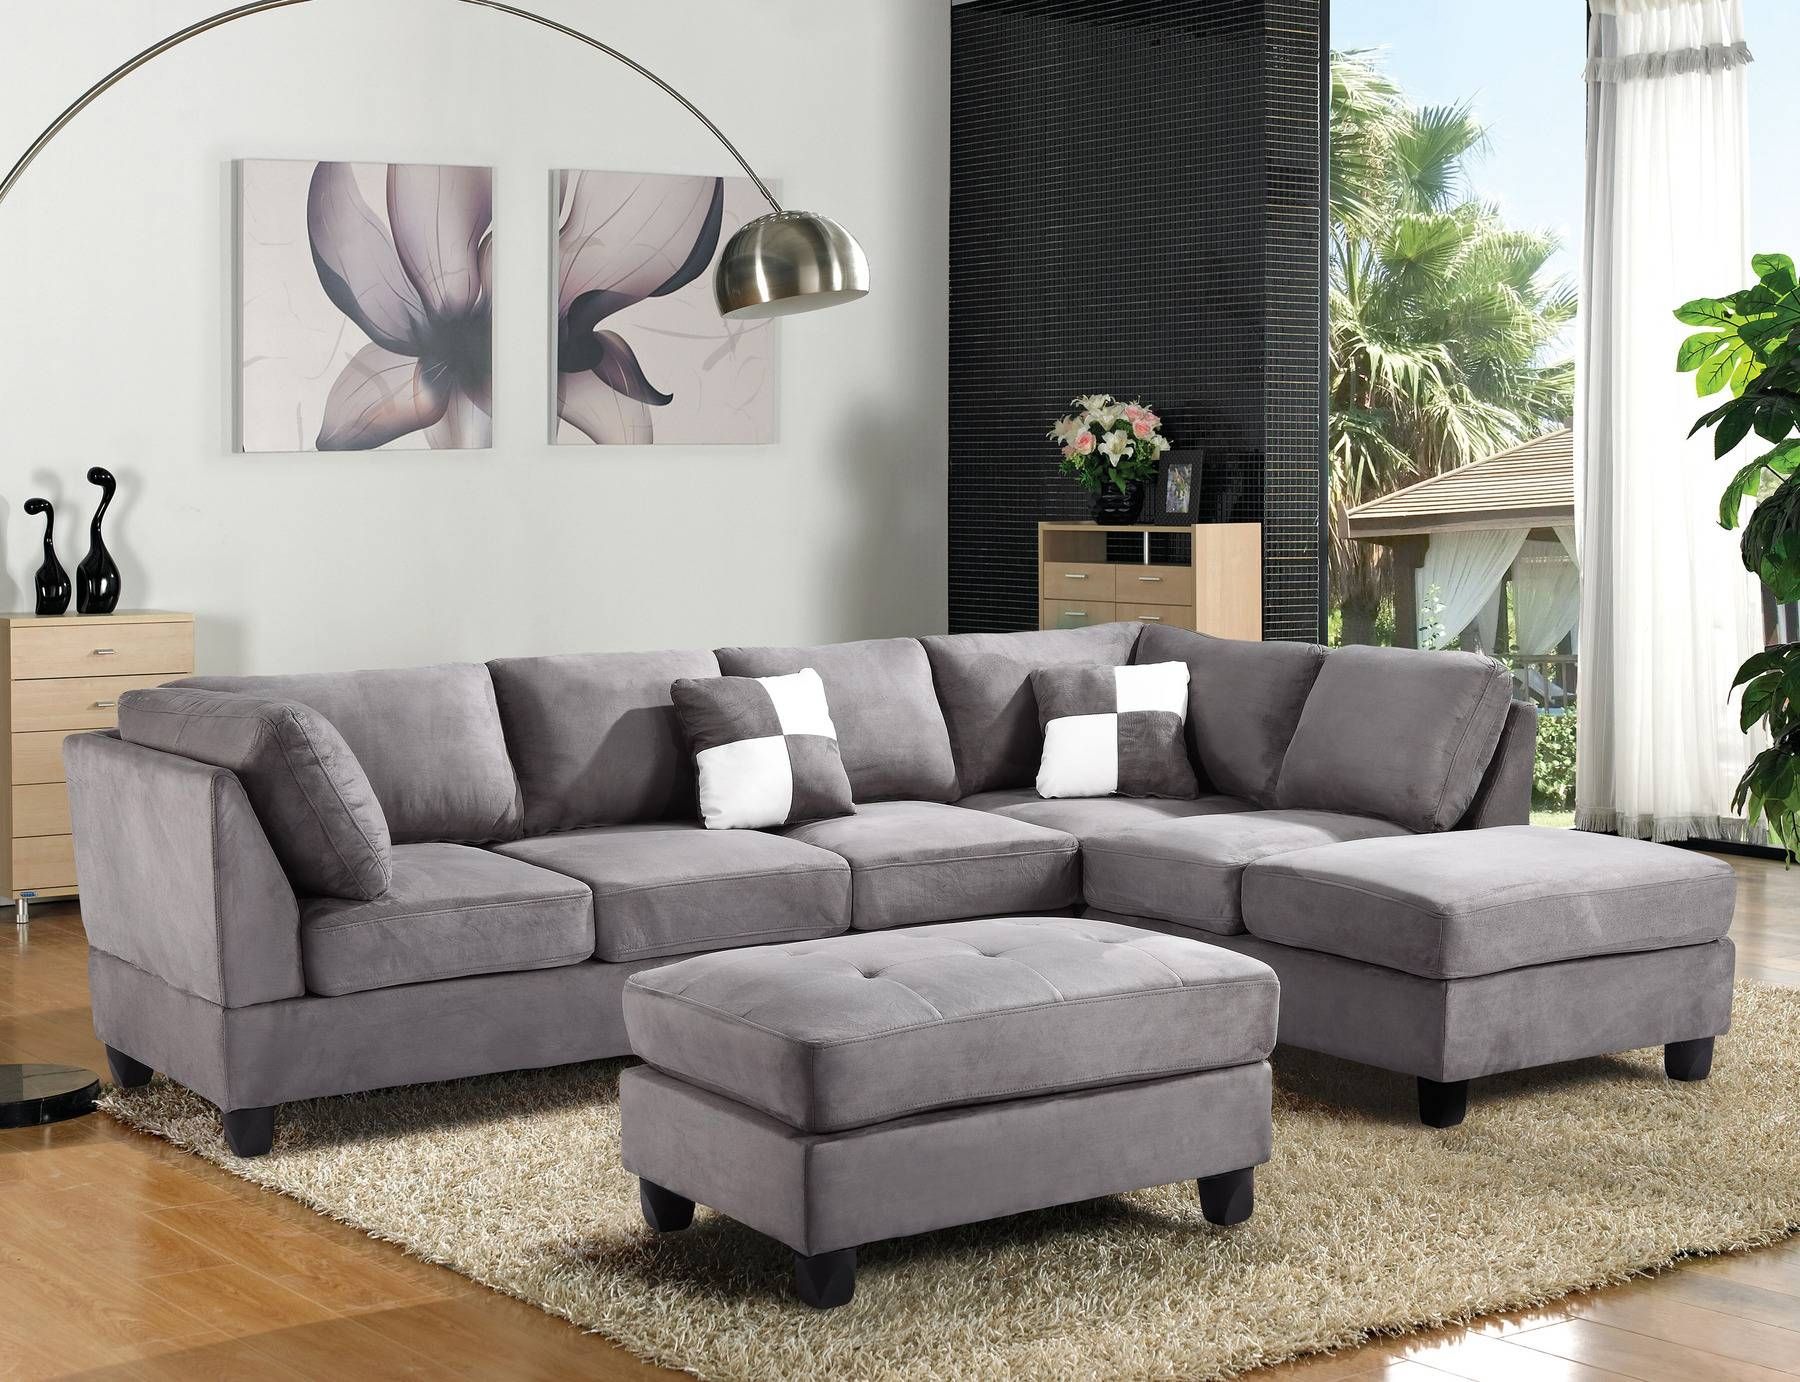 Sofa : Leather Sofas Orange County Home Design Wonderfull Regarding Sofa Orange County (View 3 of 25)